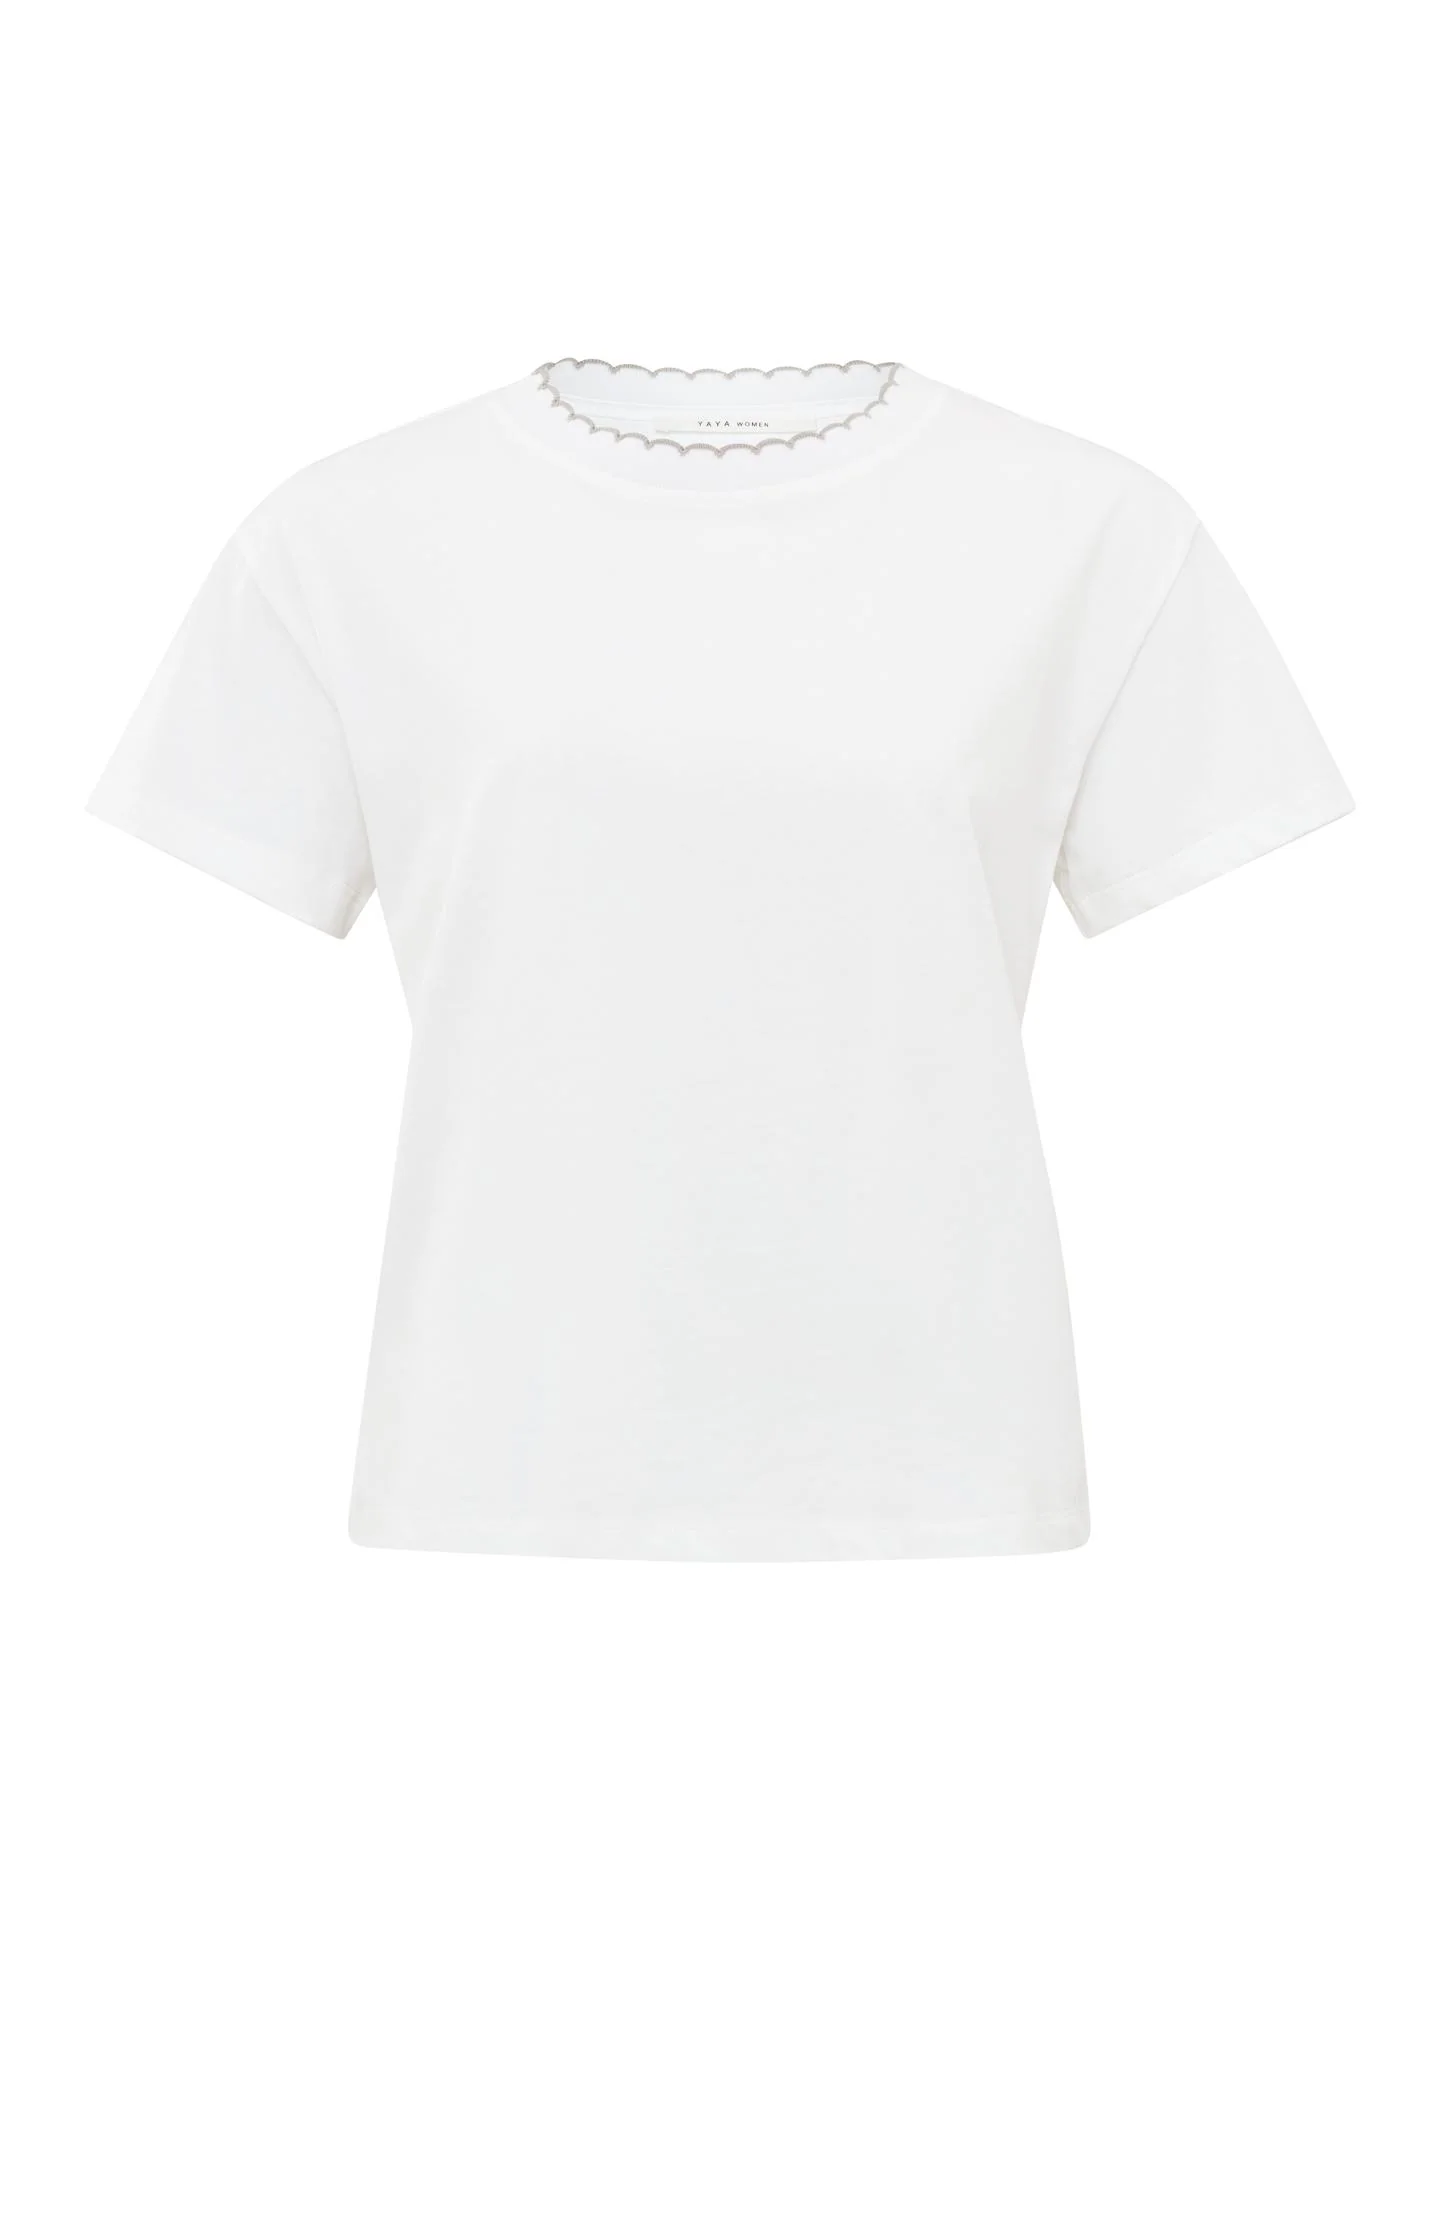 Yaya Rib Neckline Tee - Pure White Clothing - Tops - Shirts - SS Knits by Yaya | Grace the Boutique